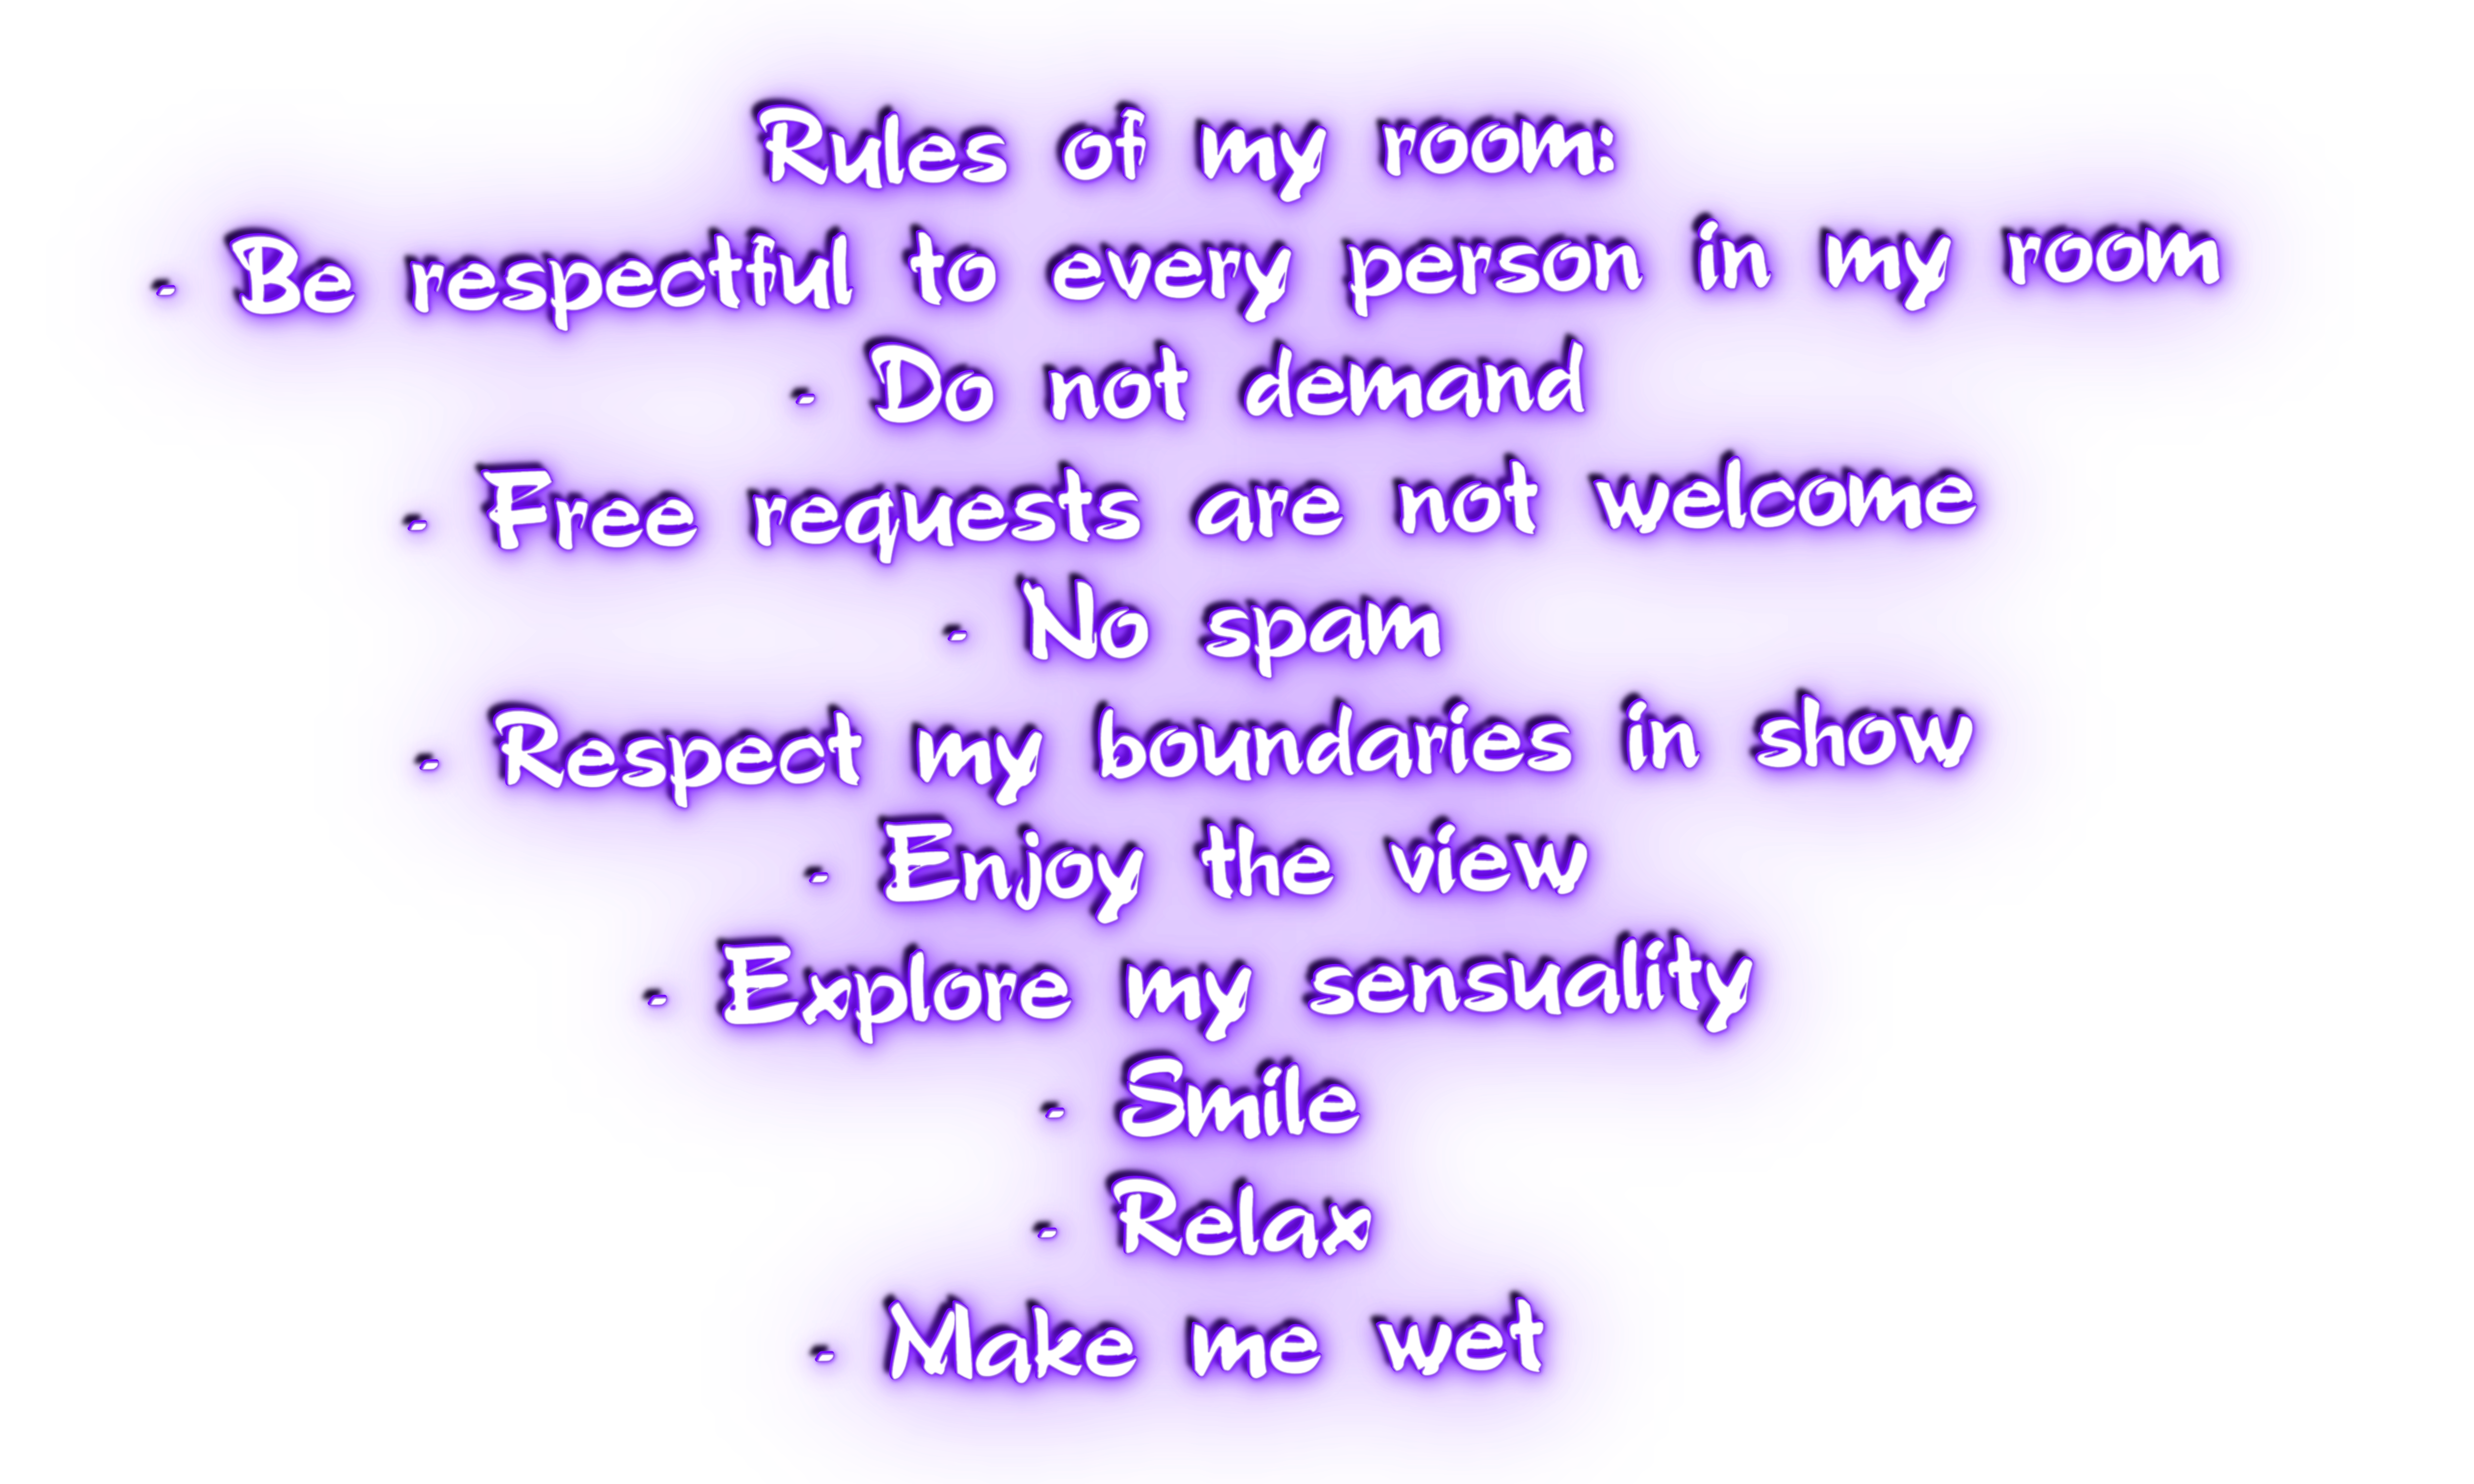 Greenicee Rules of my room image: 1